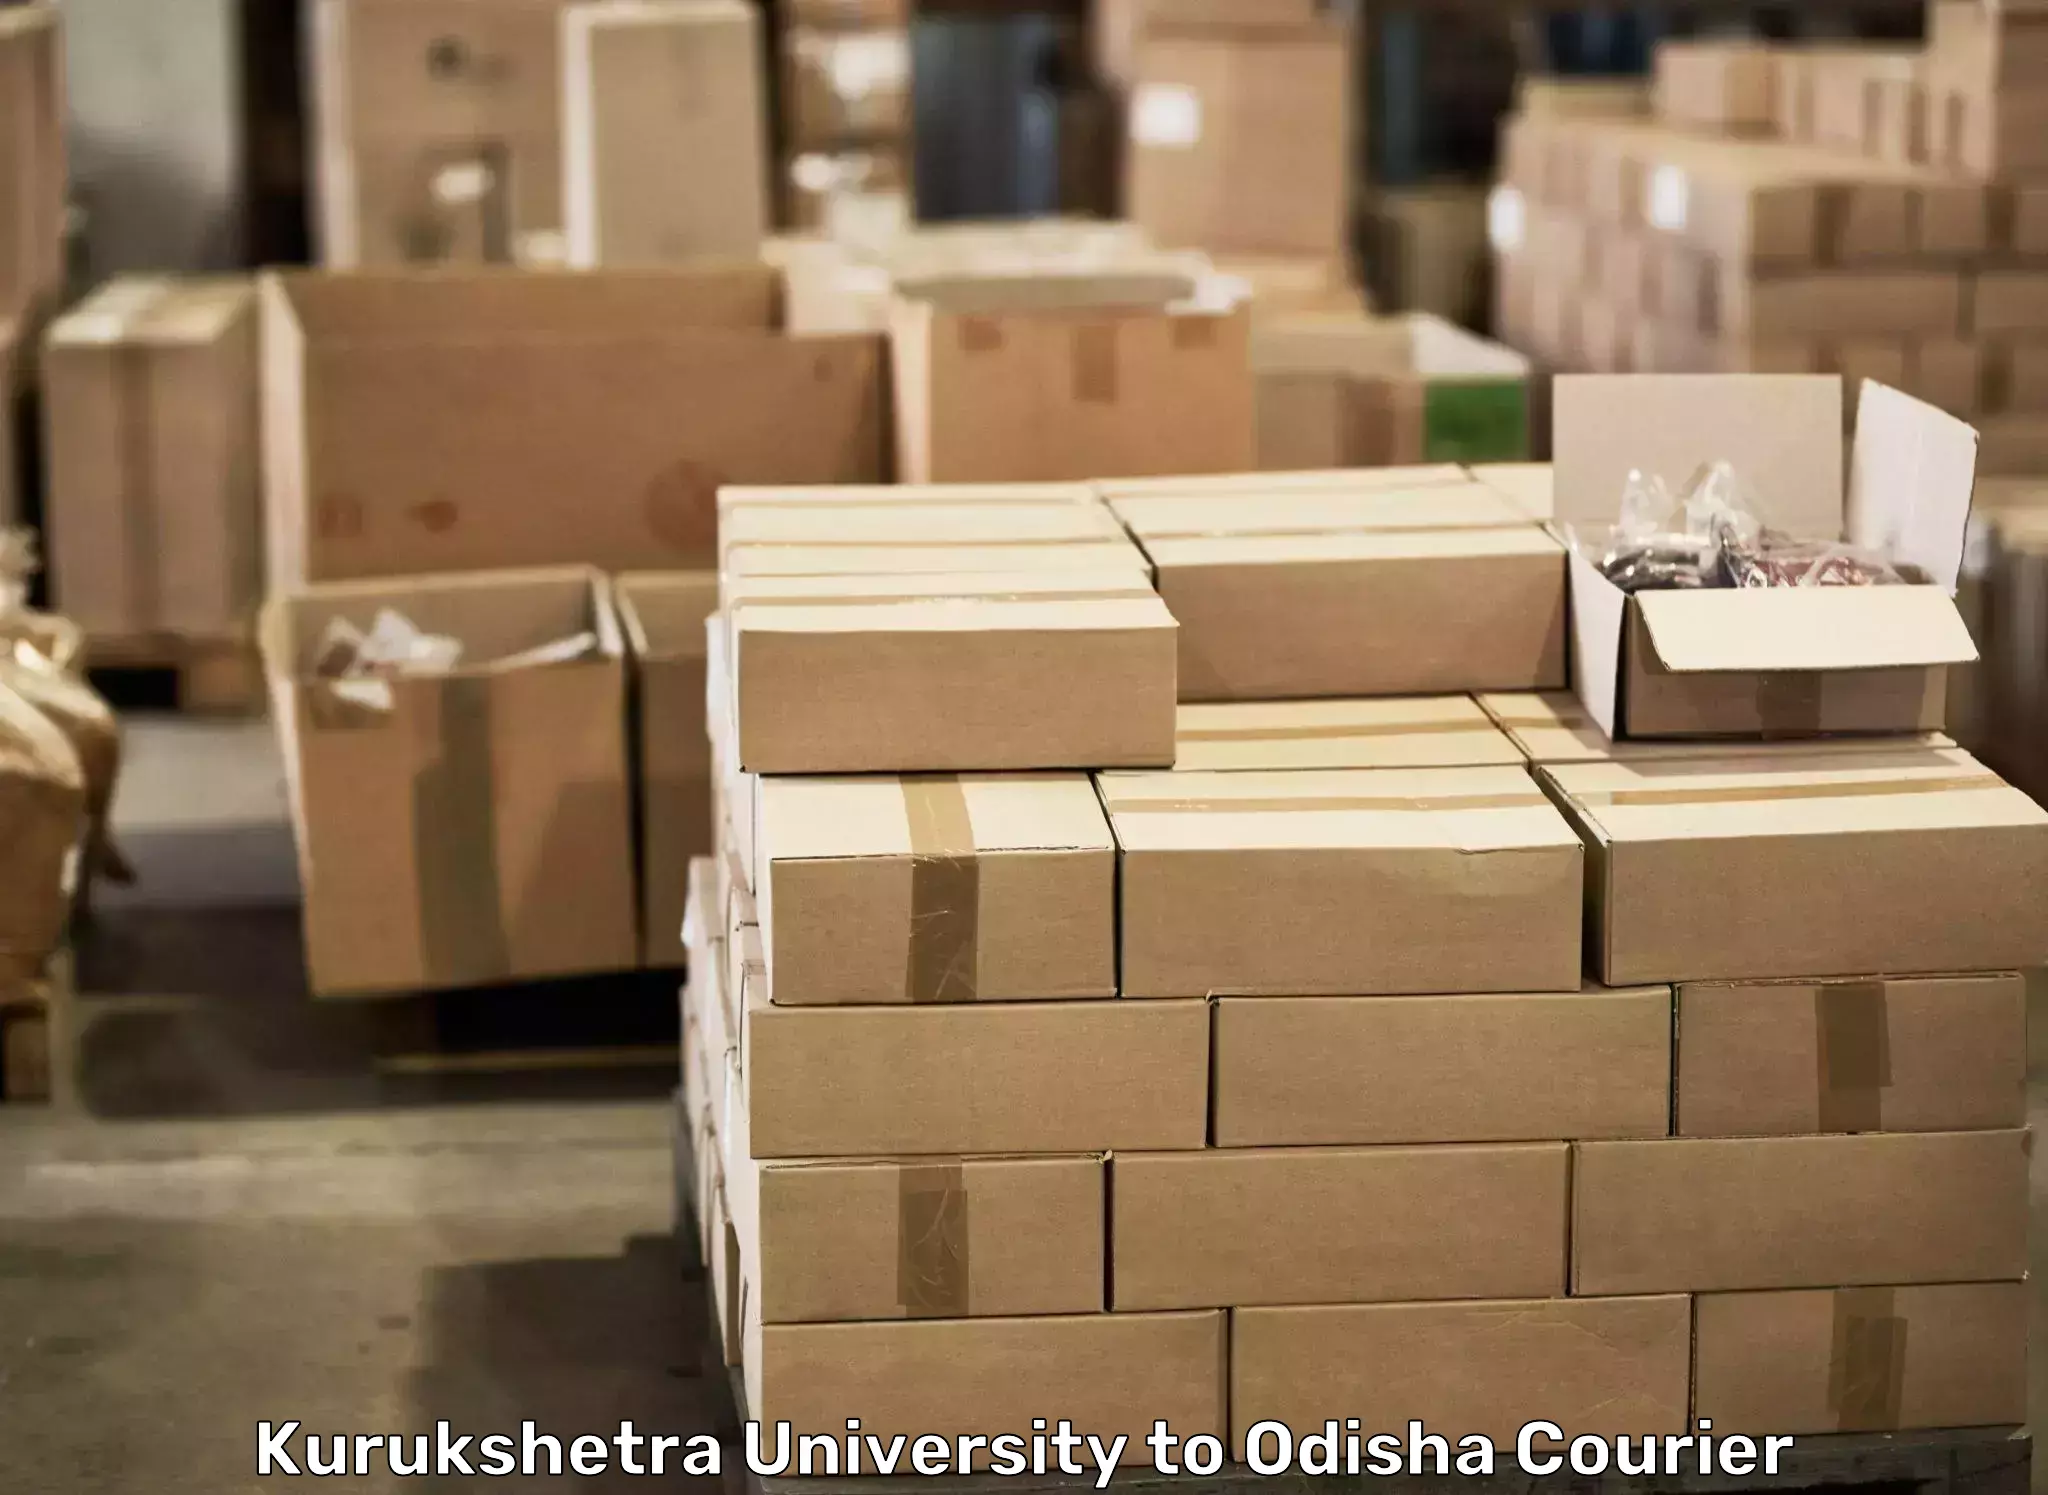 Furniture relocation experts Kurukshetra University to Rourkela